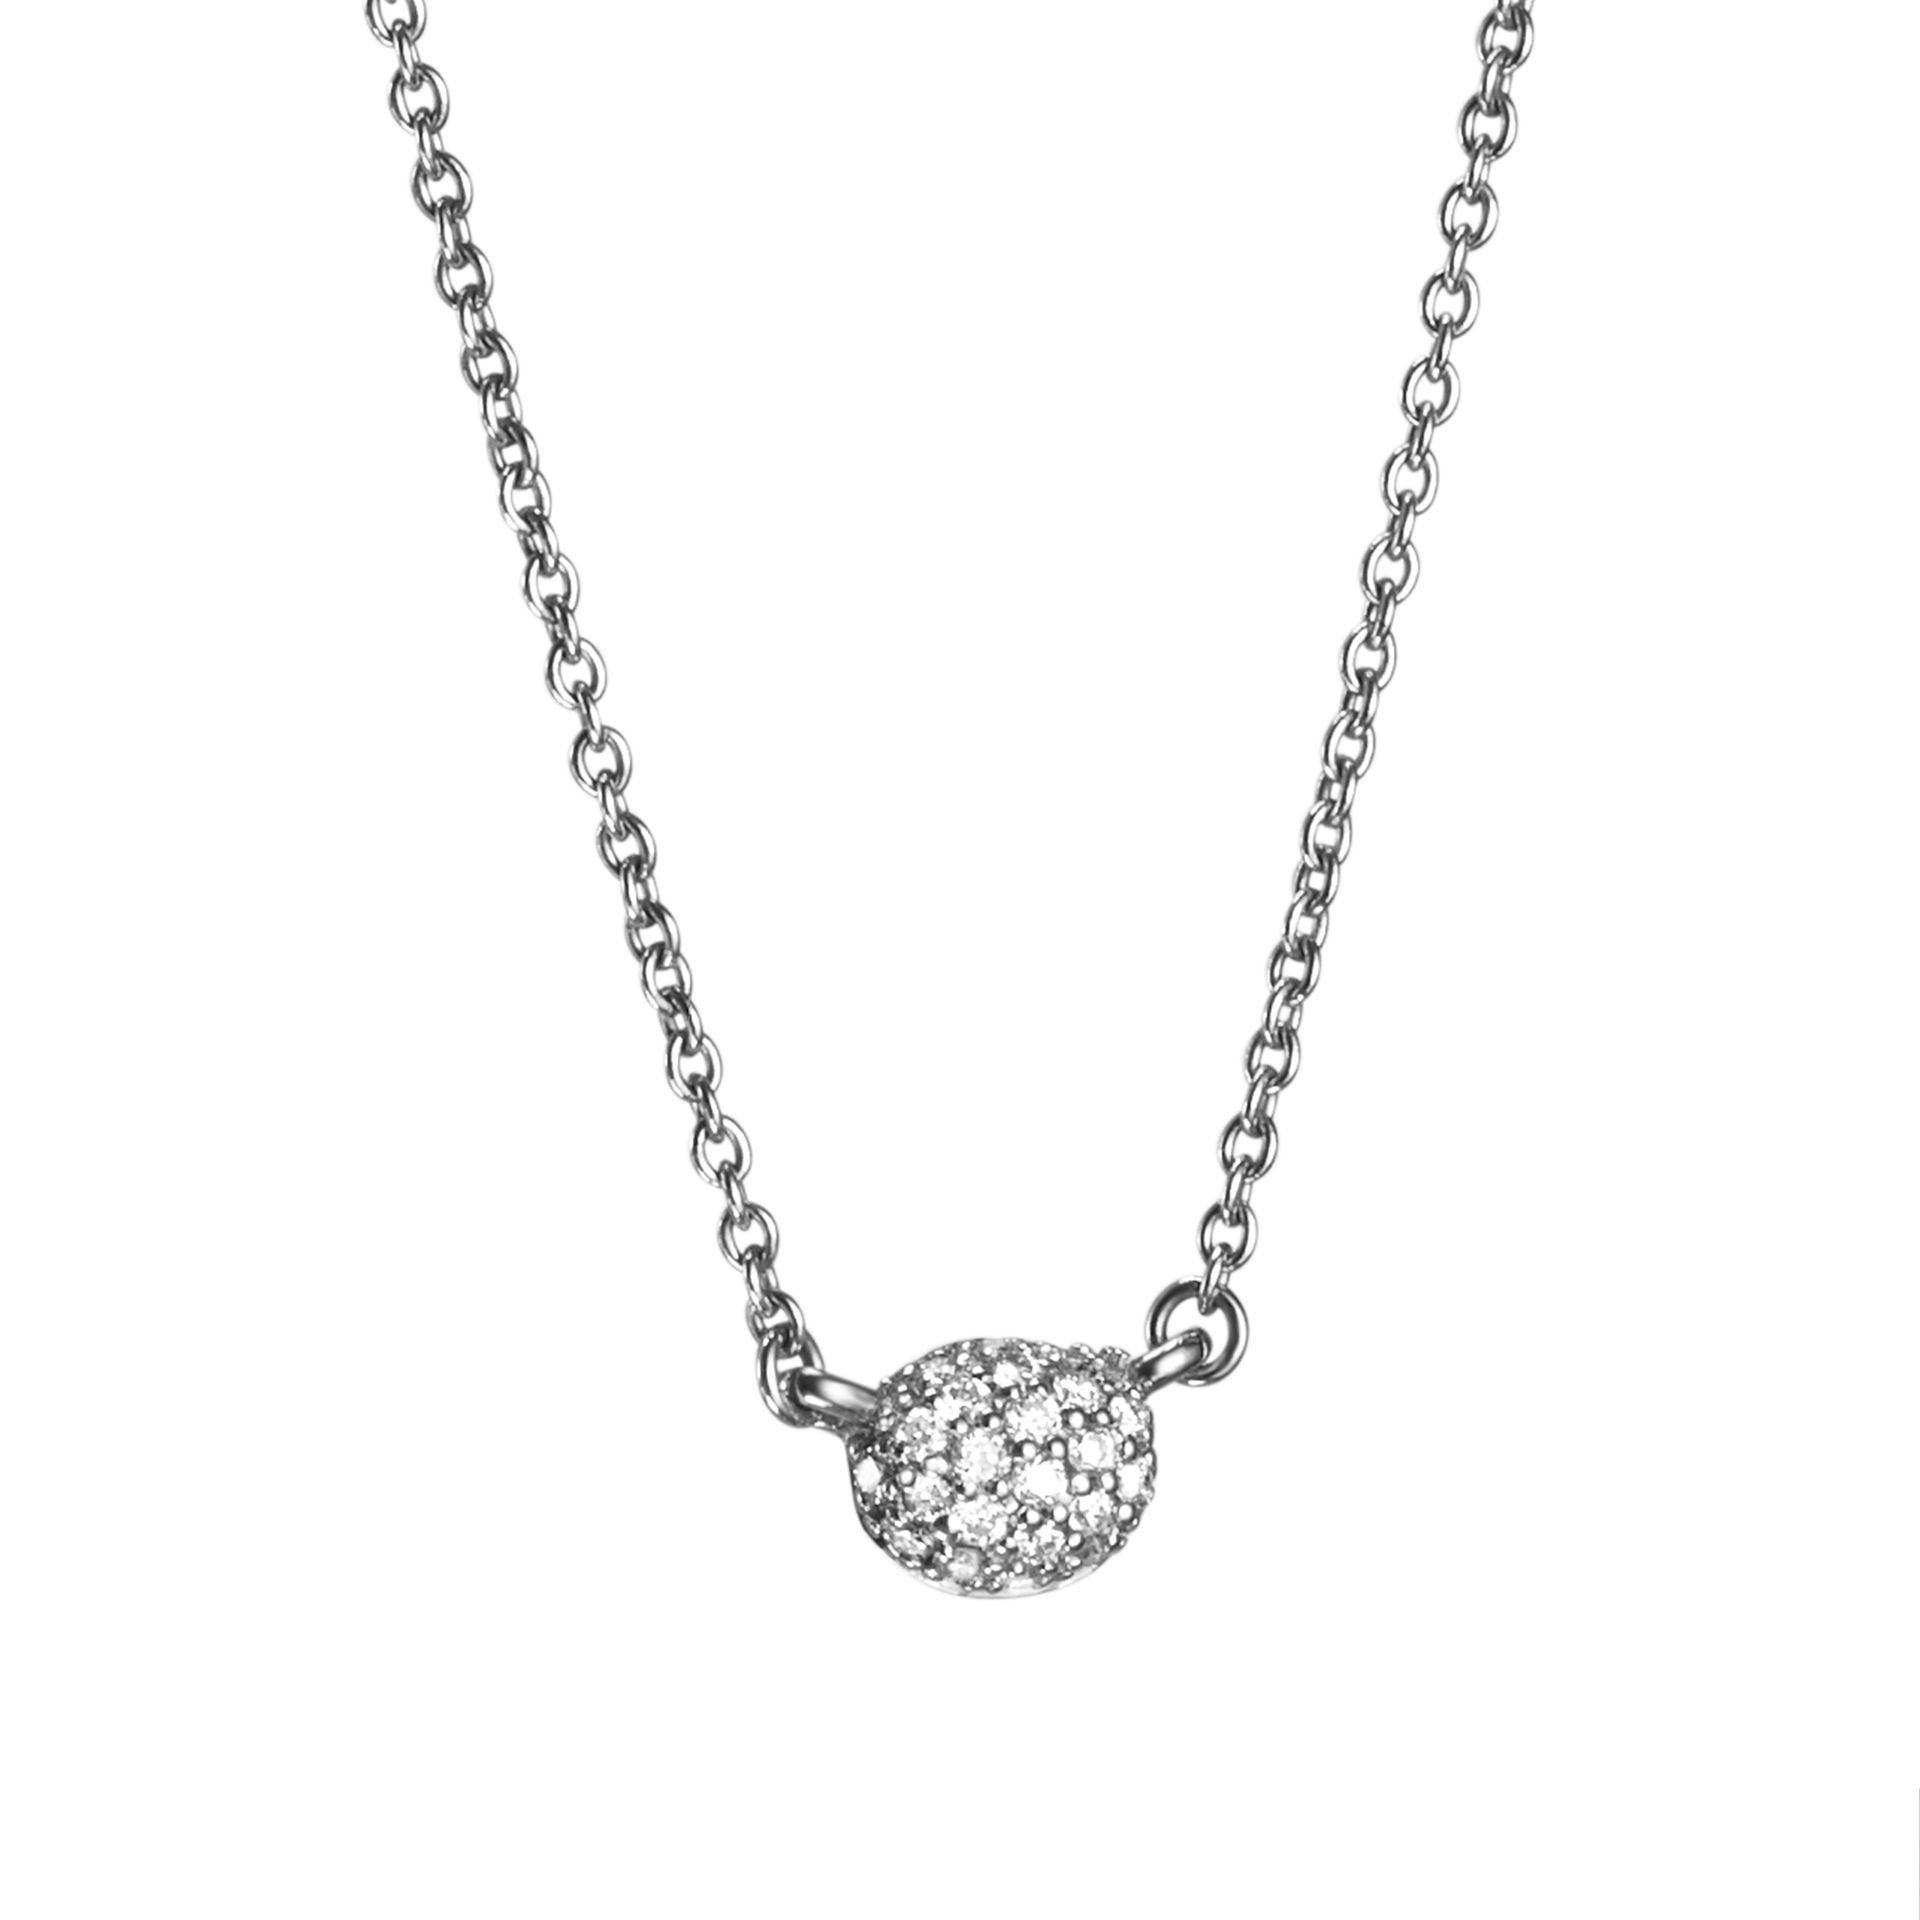 Efva Attling Love Bead Necklace - Diamonds 38/40/42 CM - VITGULD